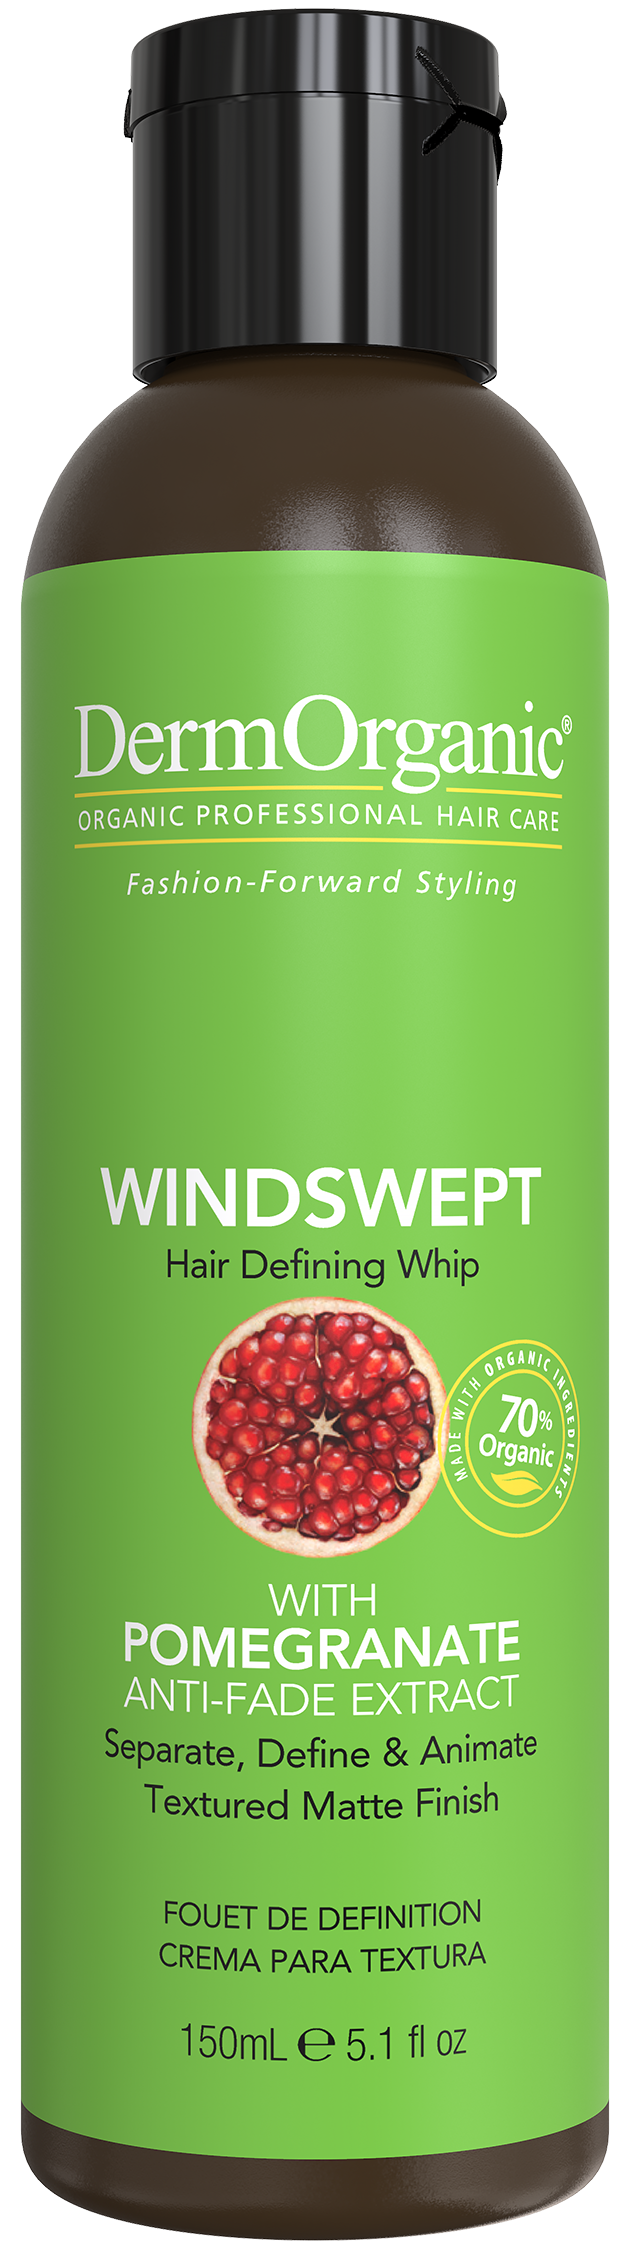 Windswept Hair Defining Whip